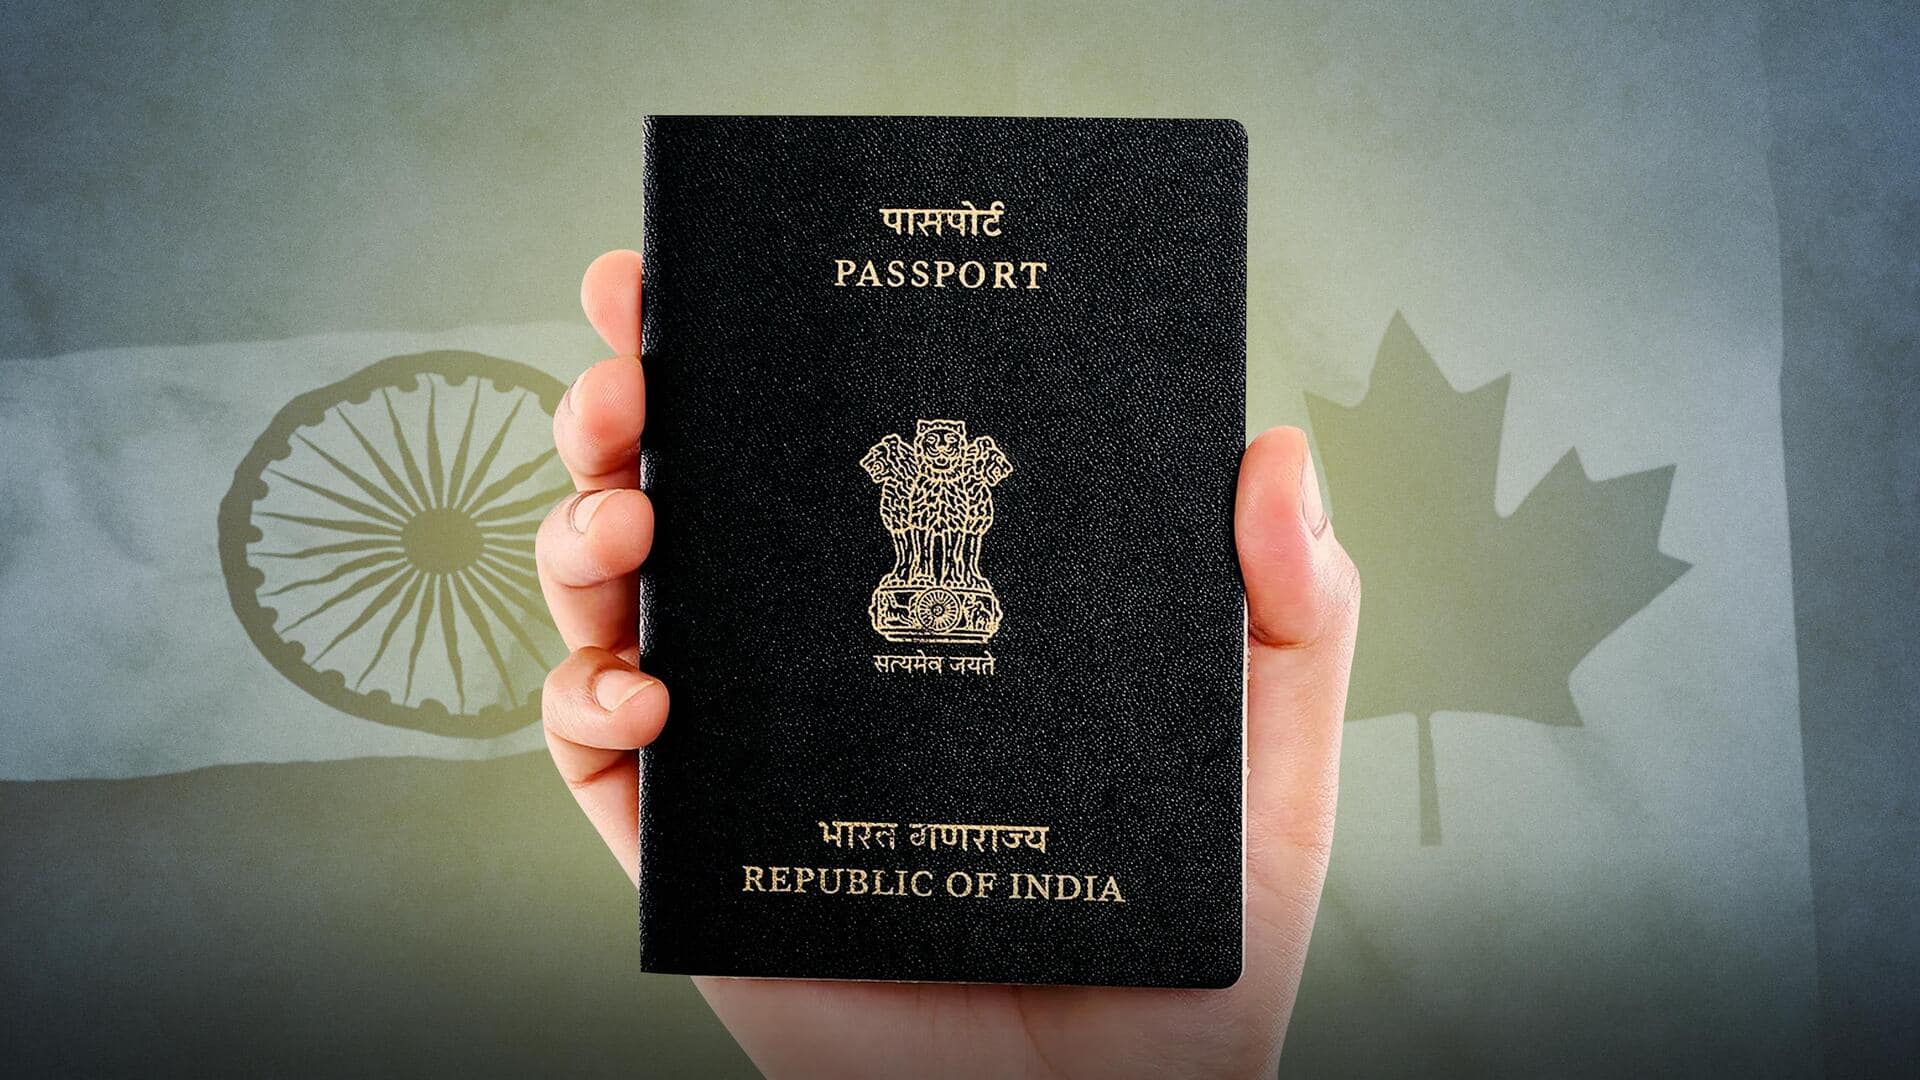 Expect delays in visa processing: Canada tells Indians amid row